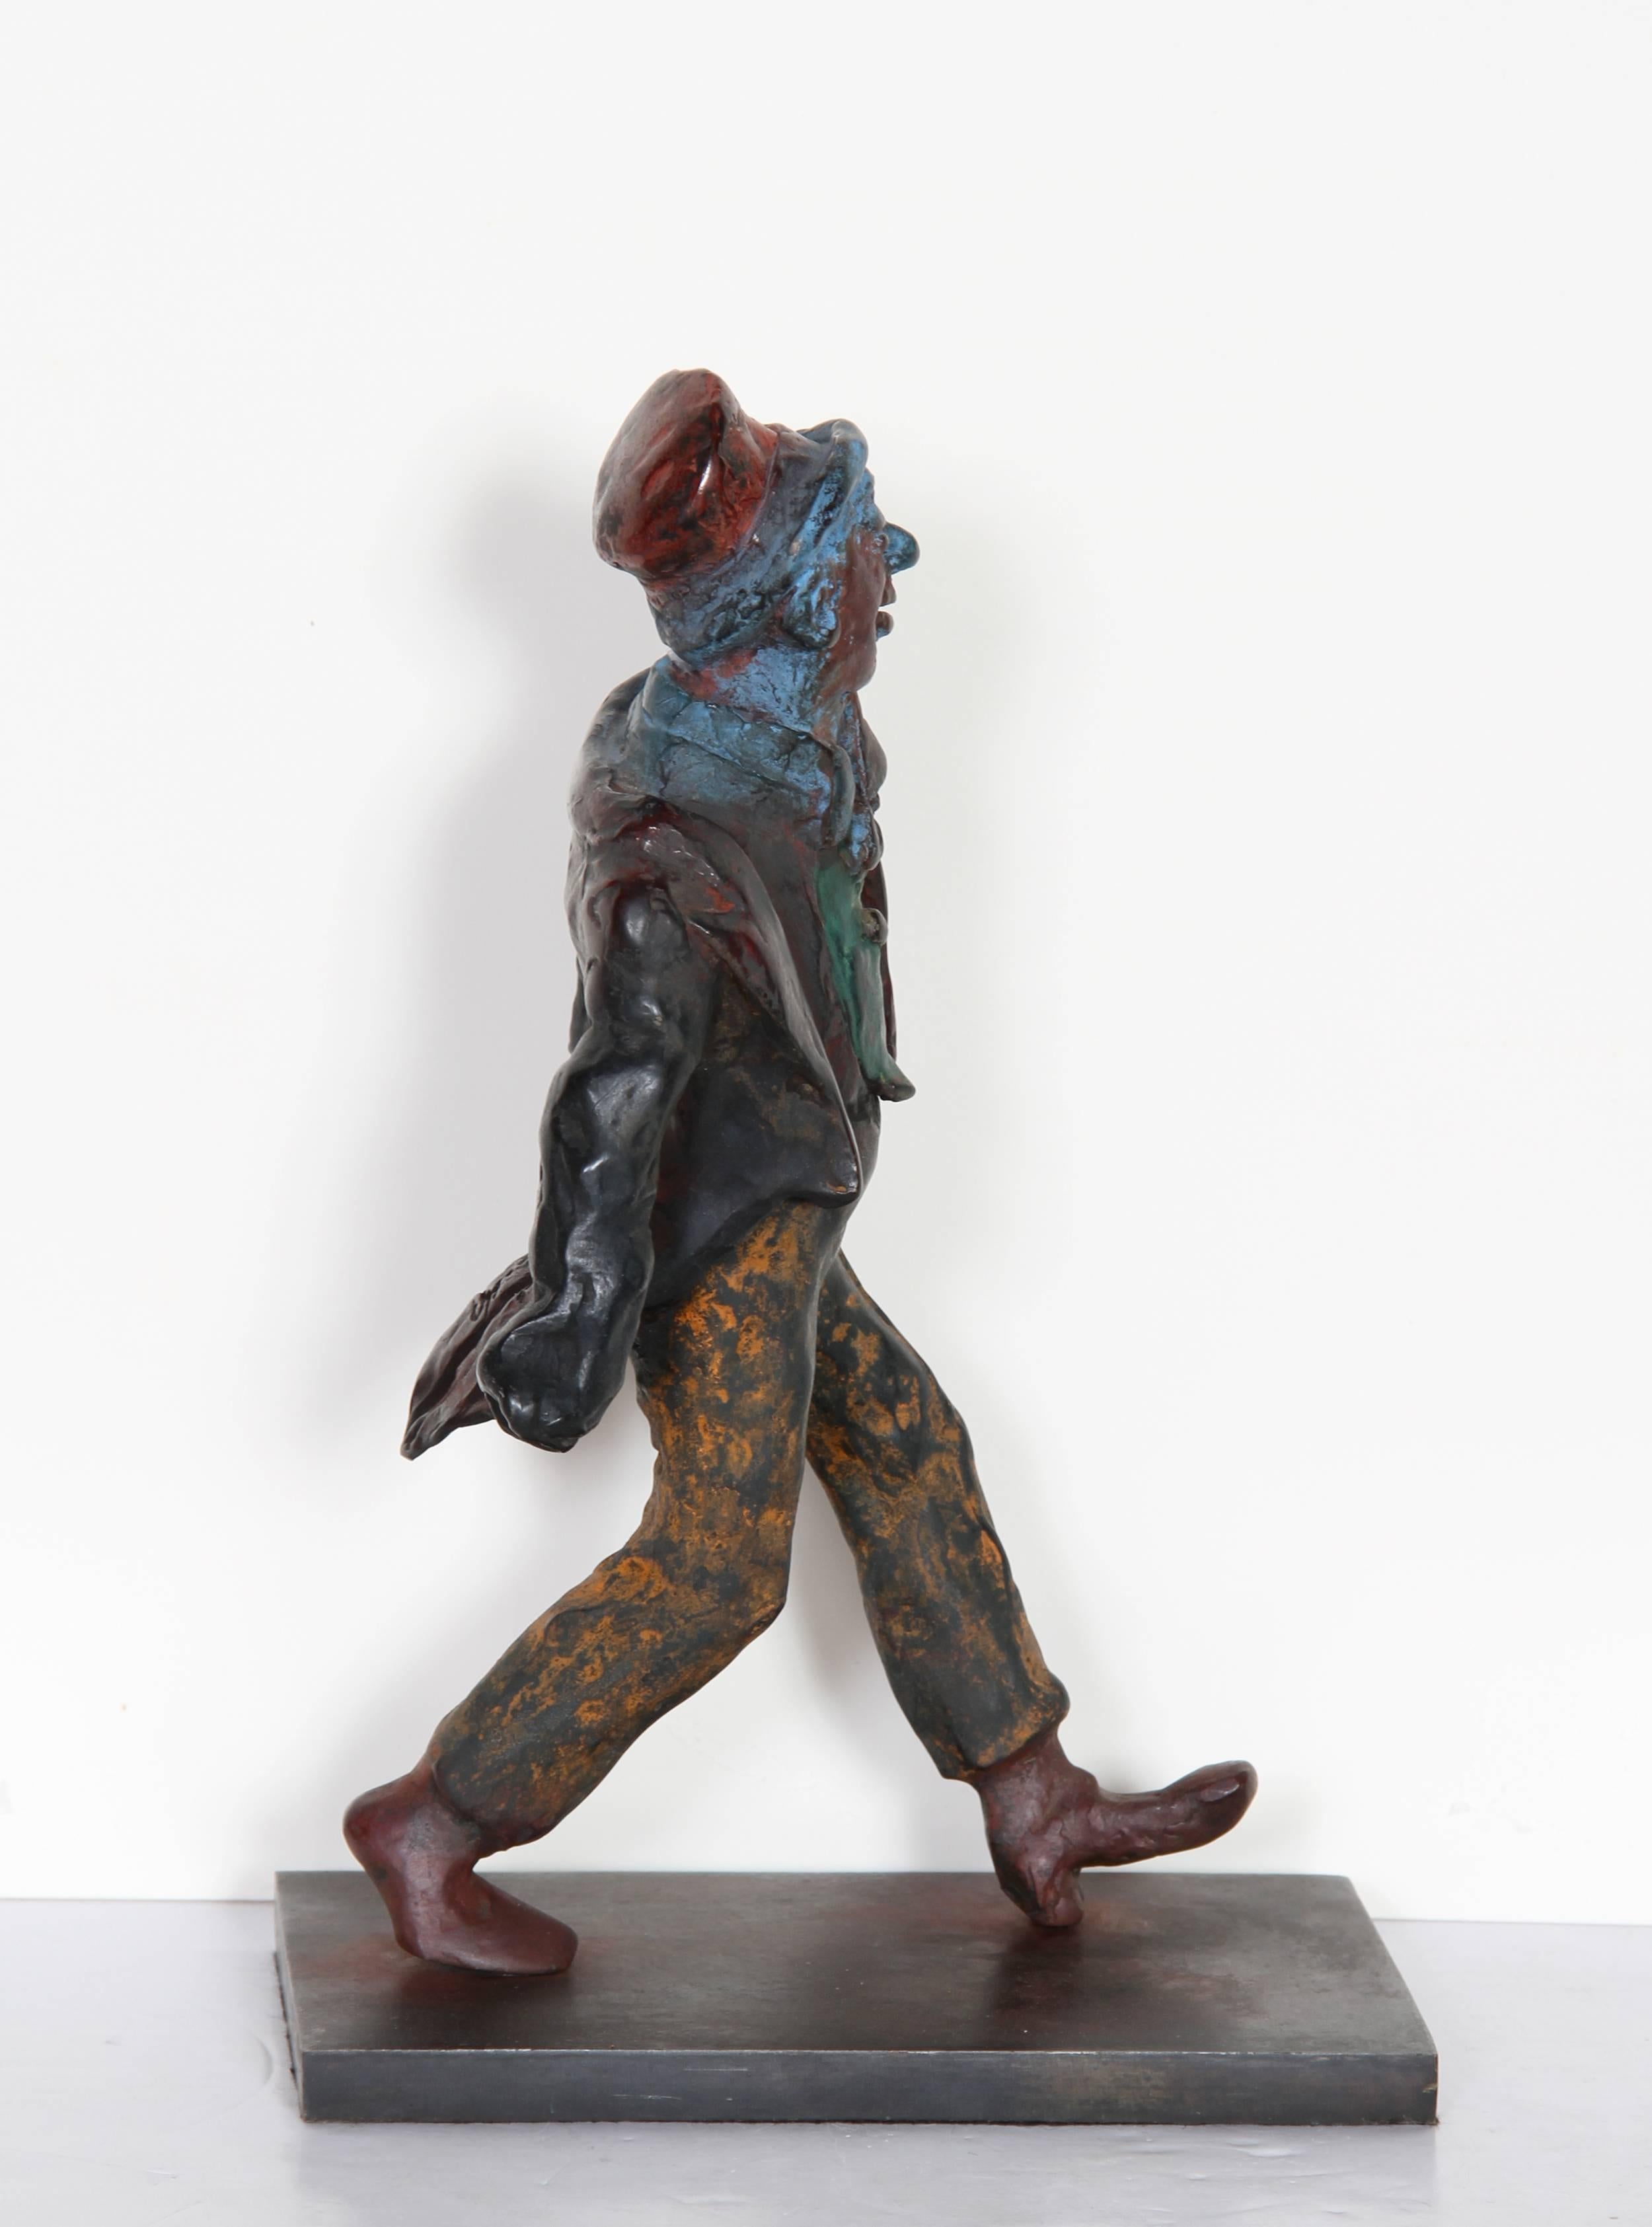 Artist: Rube Lucius Goldberg, American (1883 - 1970)
Title: Clown
Year: circa 1950
Medium: Bronze with patina, signature inscribed
Size: 12.25 in. x 3 in. x 6 in. (31.12 cm x 7.62 cm x 15.24 cm)